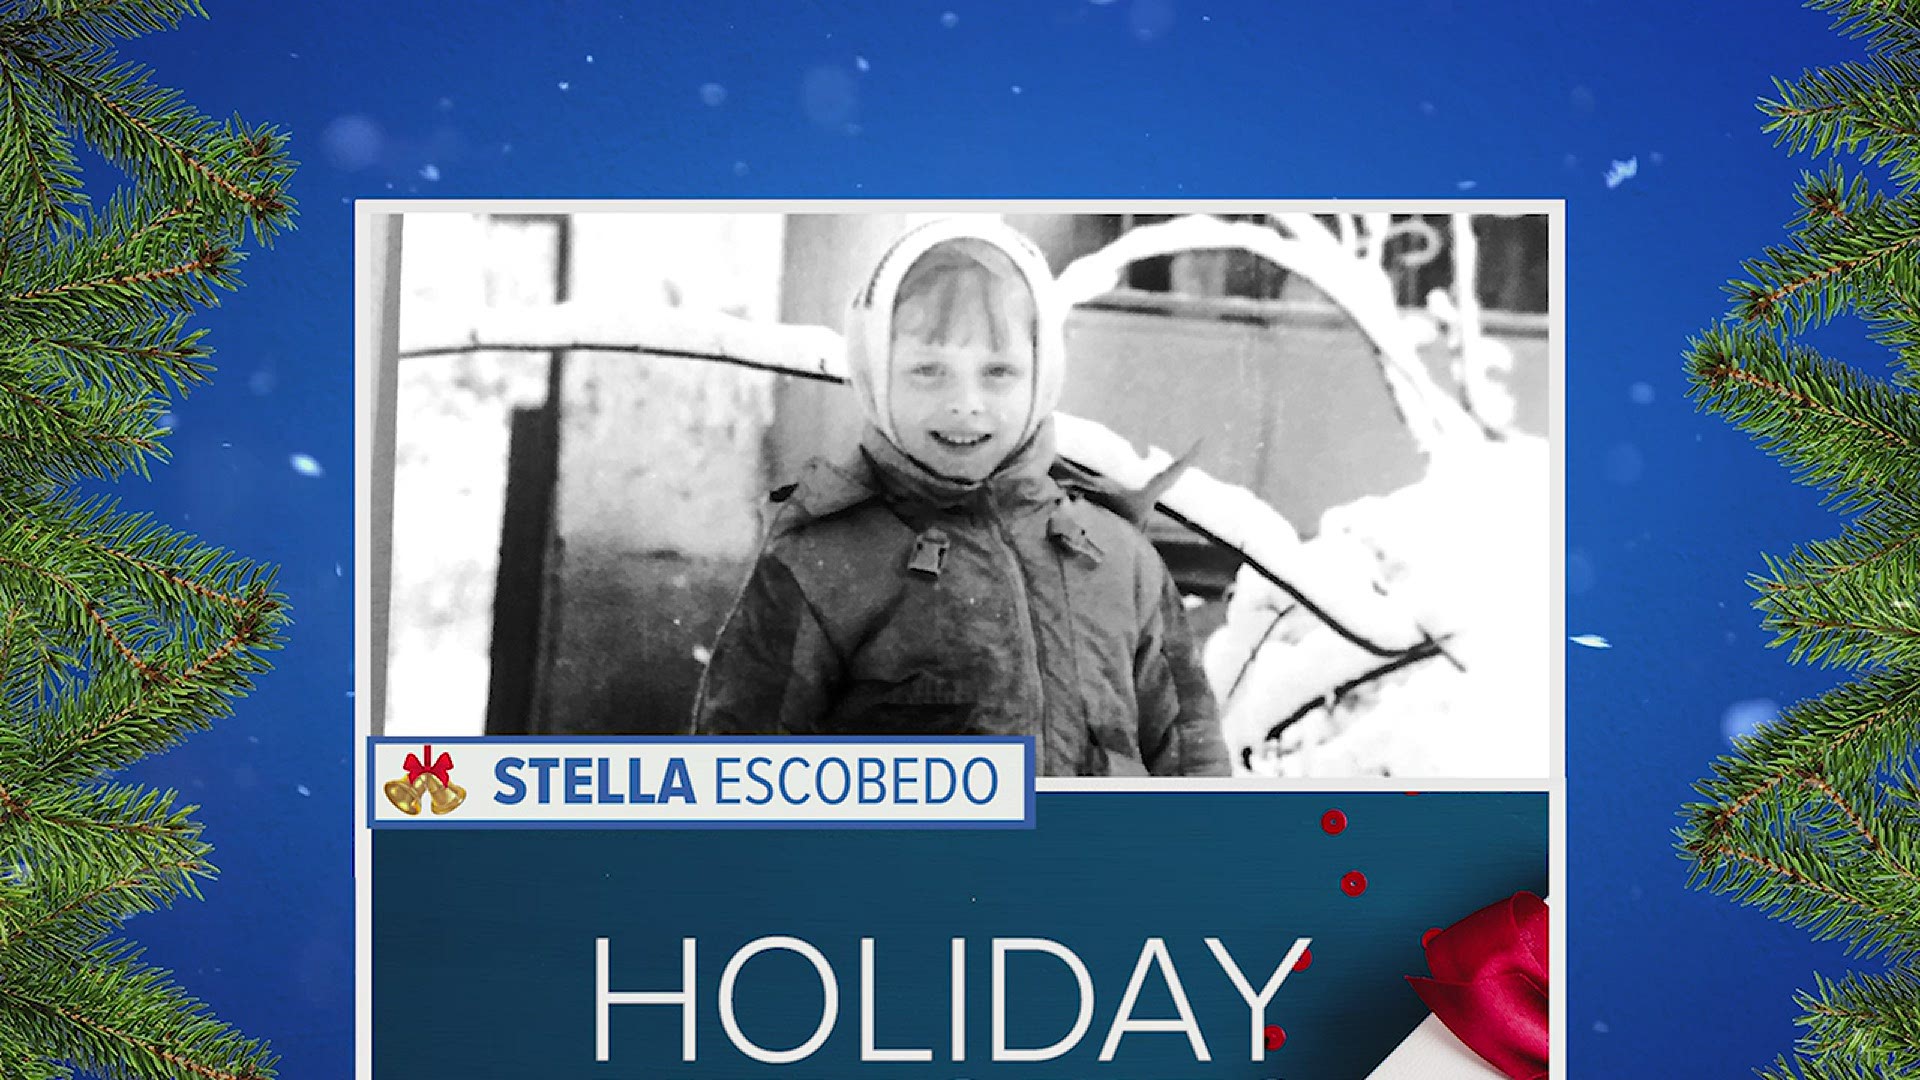 Favorite holiday memories with Stella Escobedo.